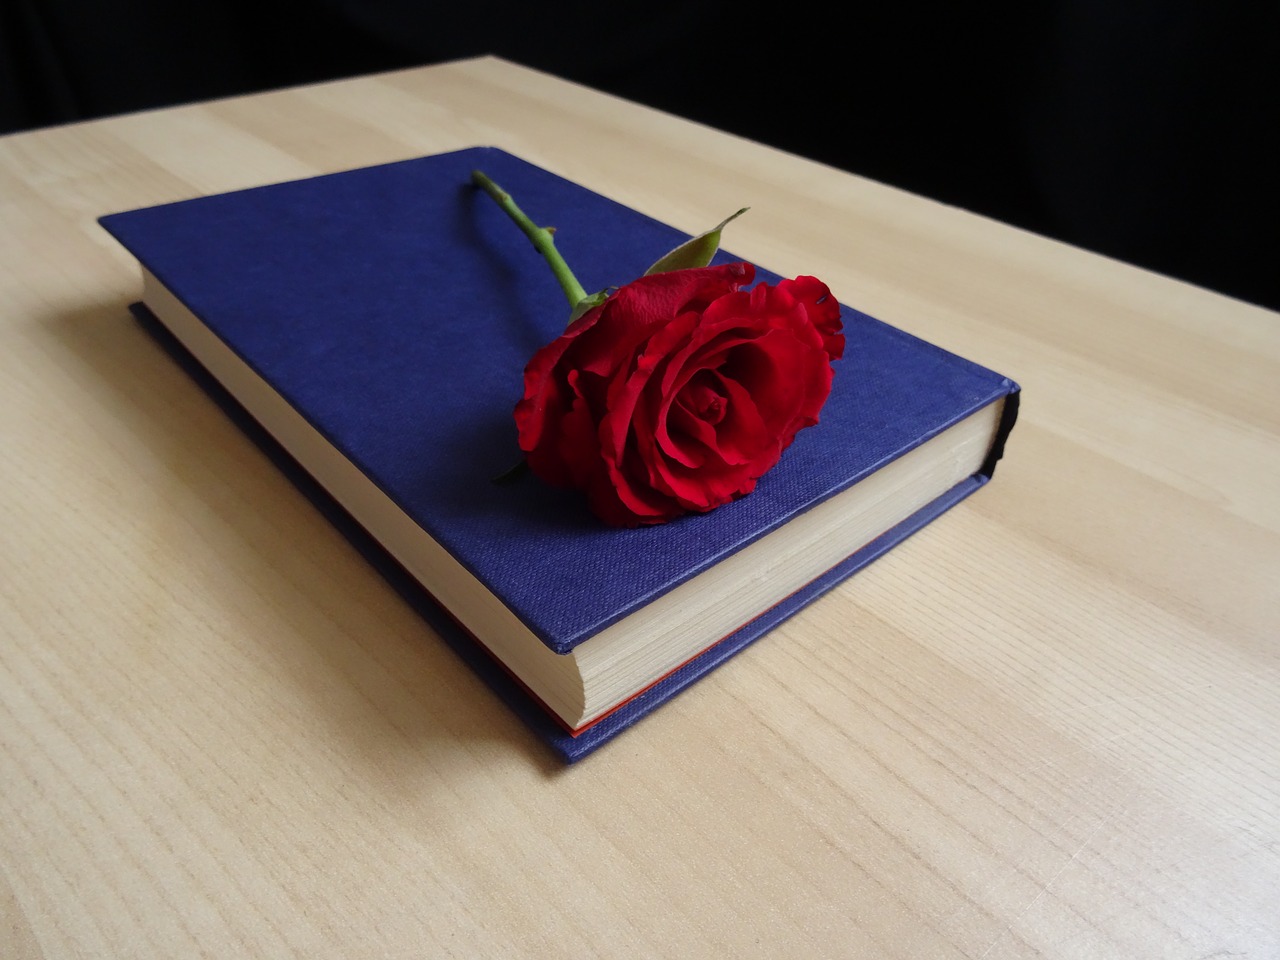 rose book romance novel free photo